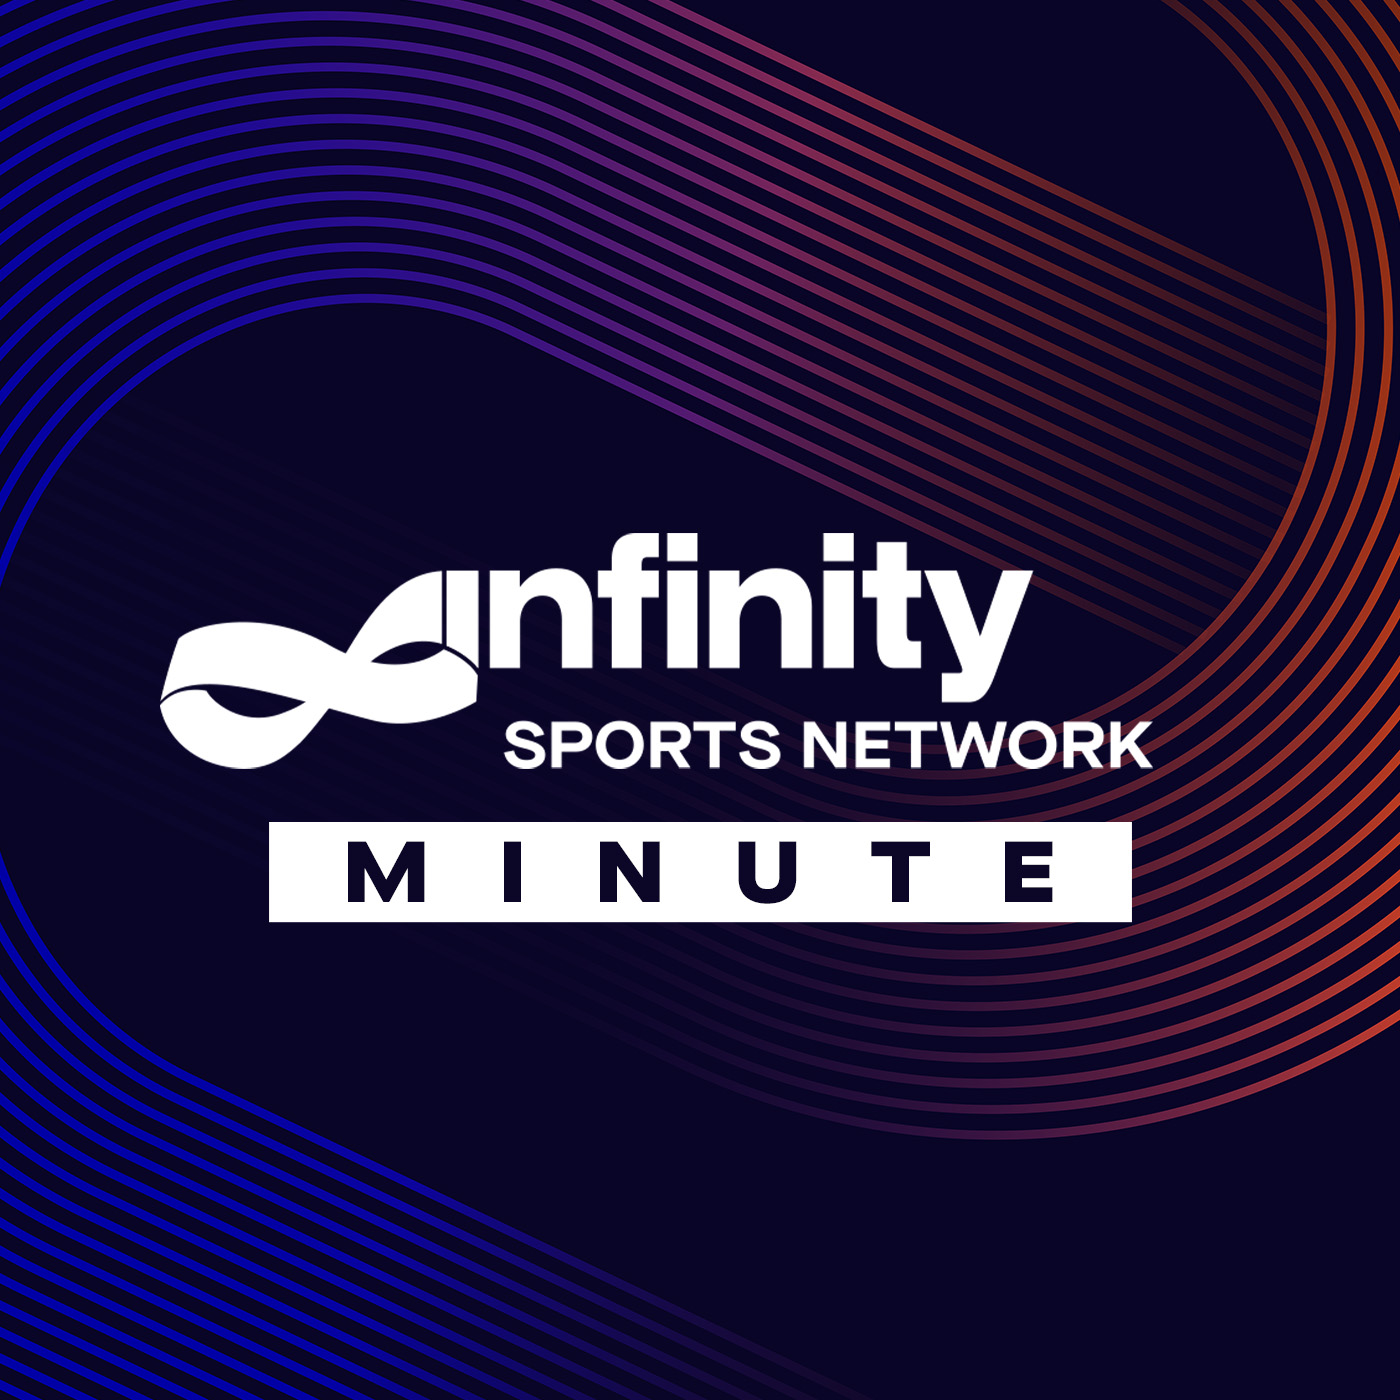 7-25 Andrew Perloff Sports Minute on the Olympics